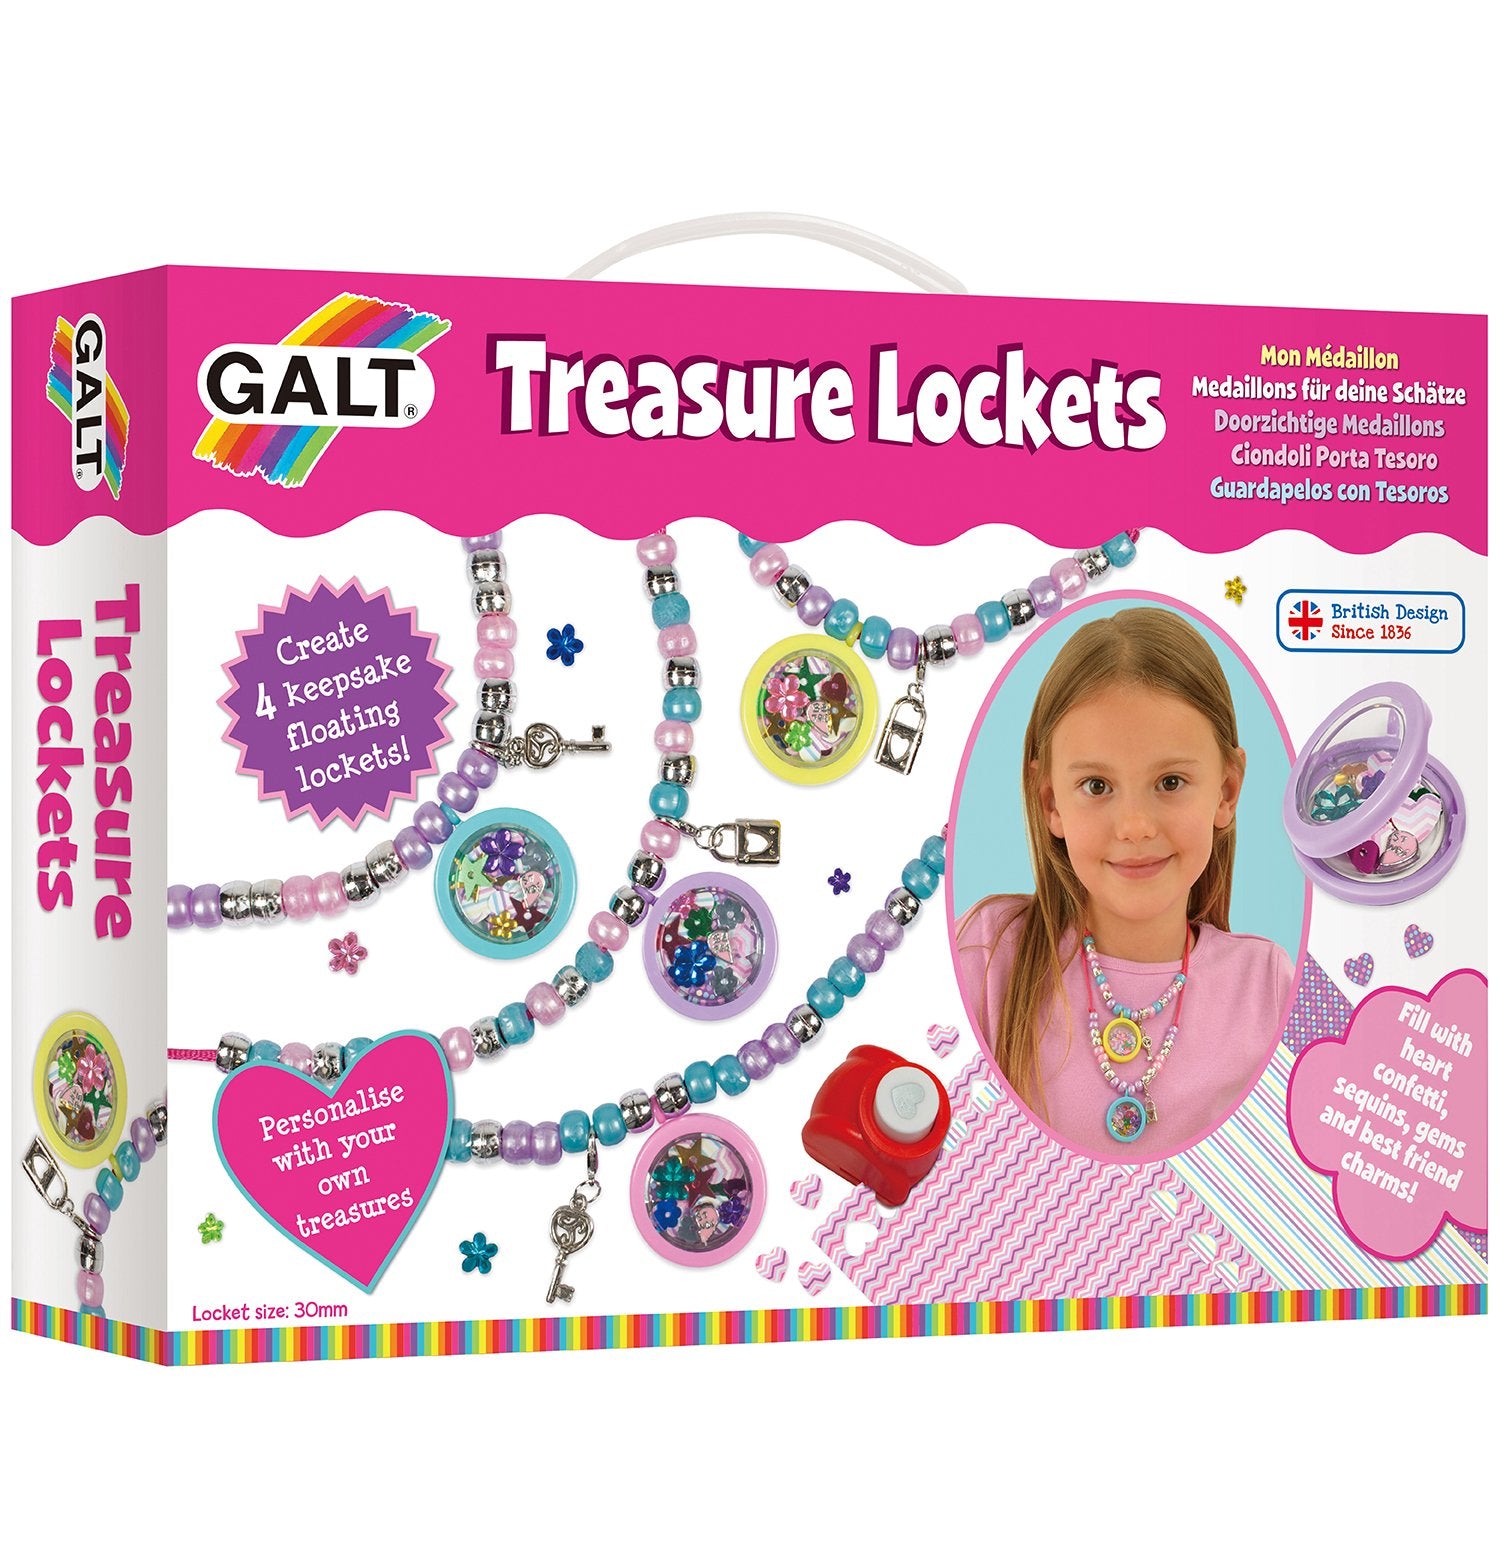 Treasure Lockets - Galt